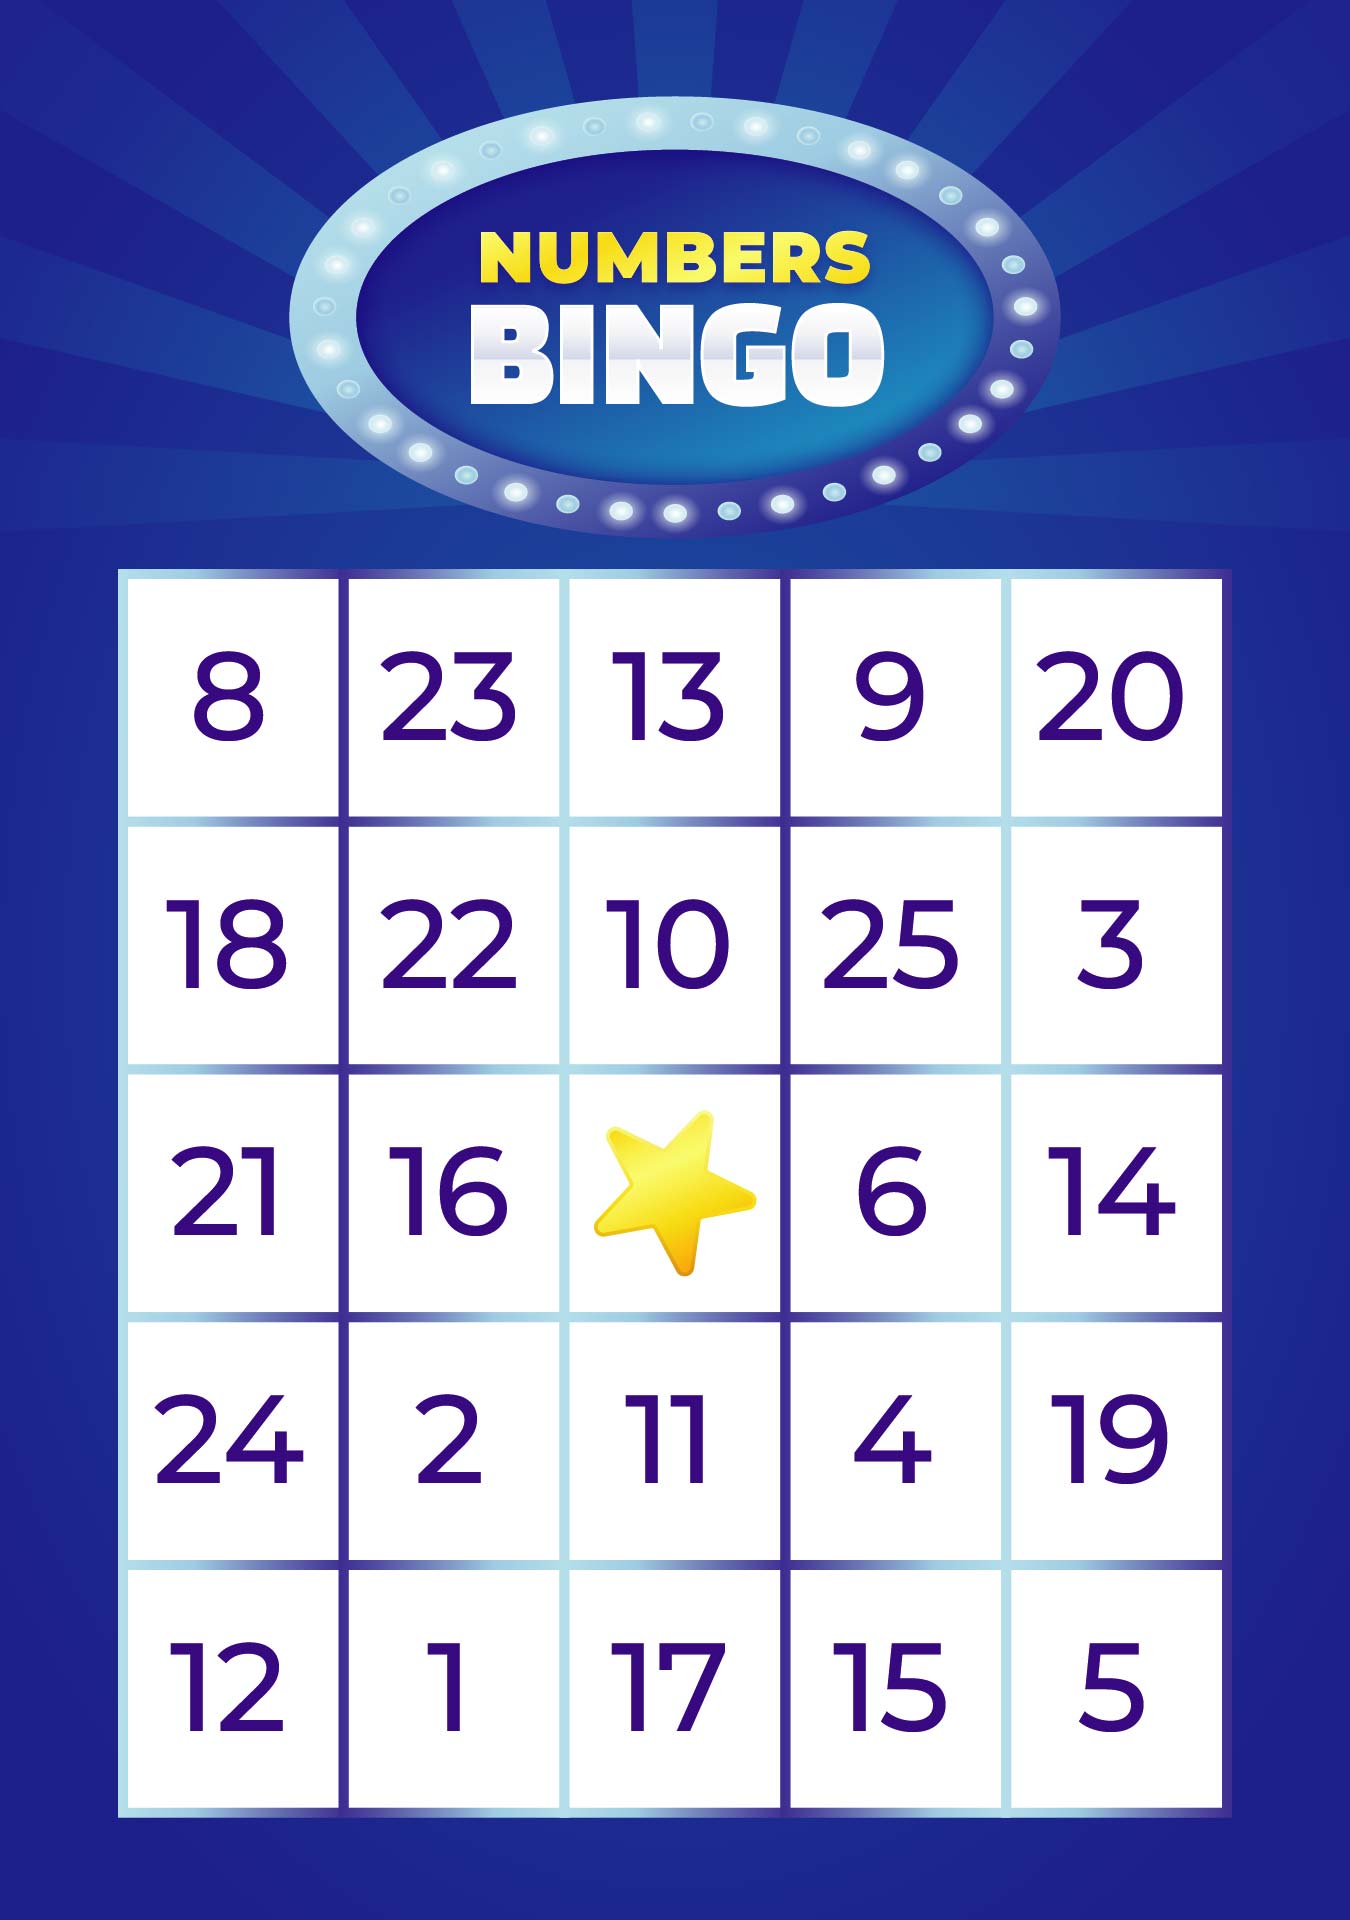 5-best-images-of-free-printable-number-bingo-cards-printable-bingo-cards-with-numbers-free